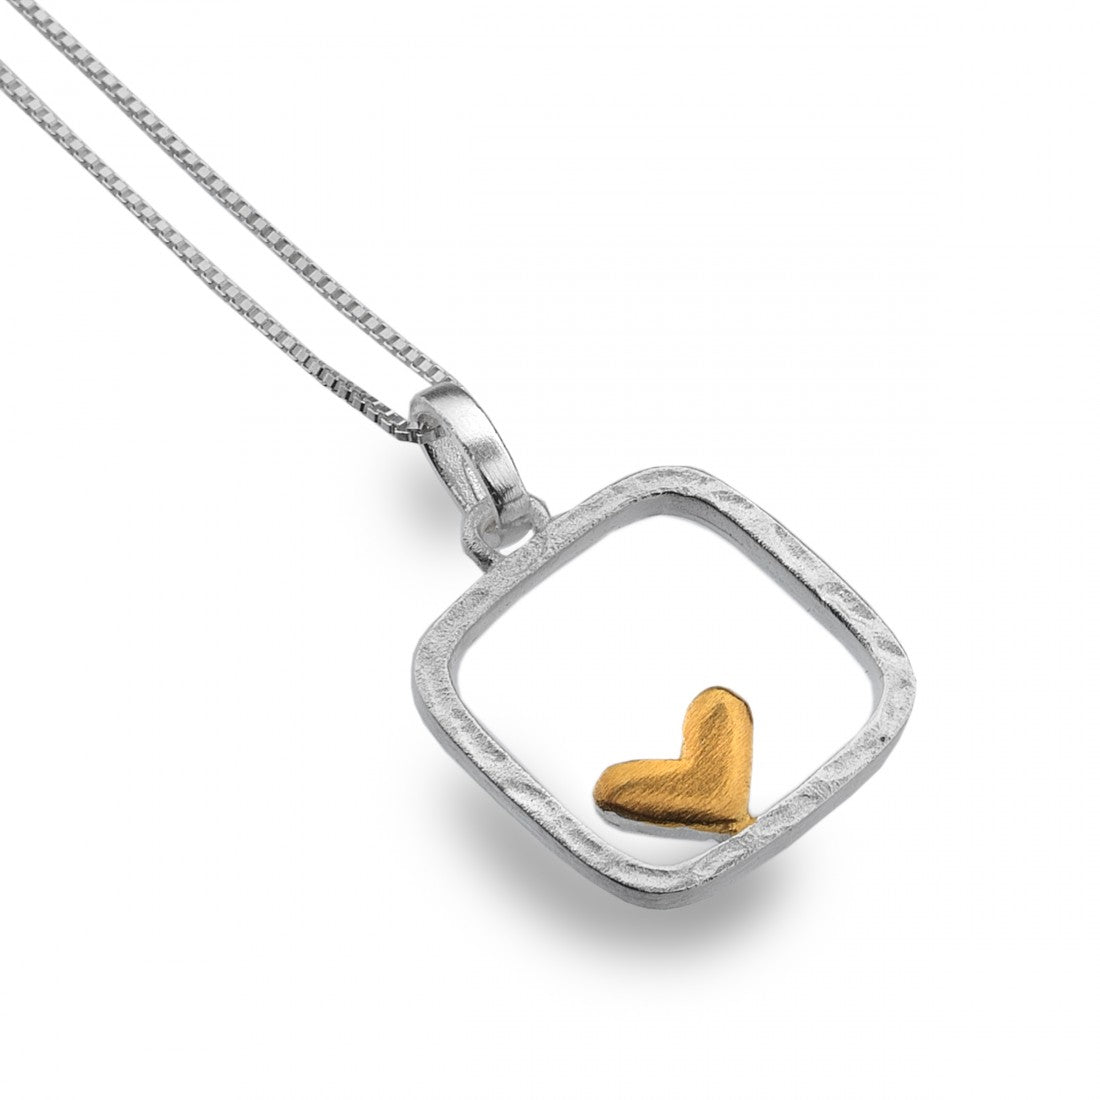 Heart in Frame Necklace - The Nancy Smillie Shop - Art, Jewellery & Designer Gifts Glasgow